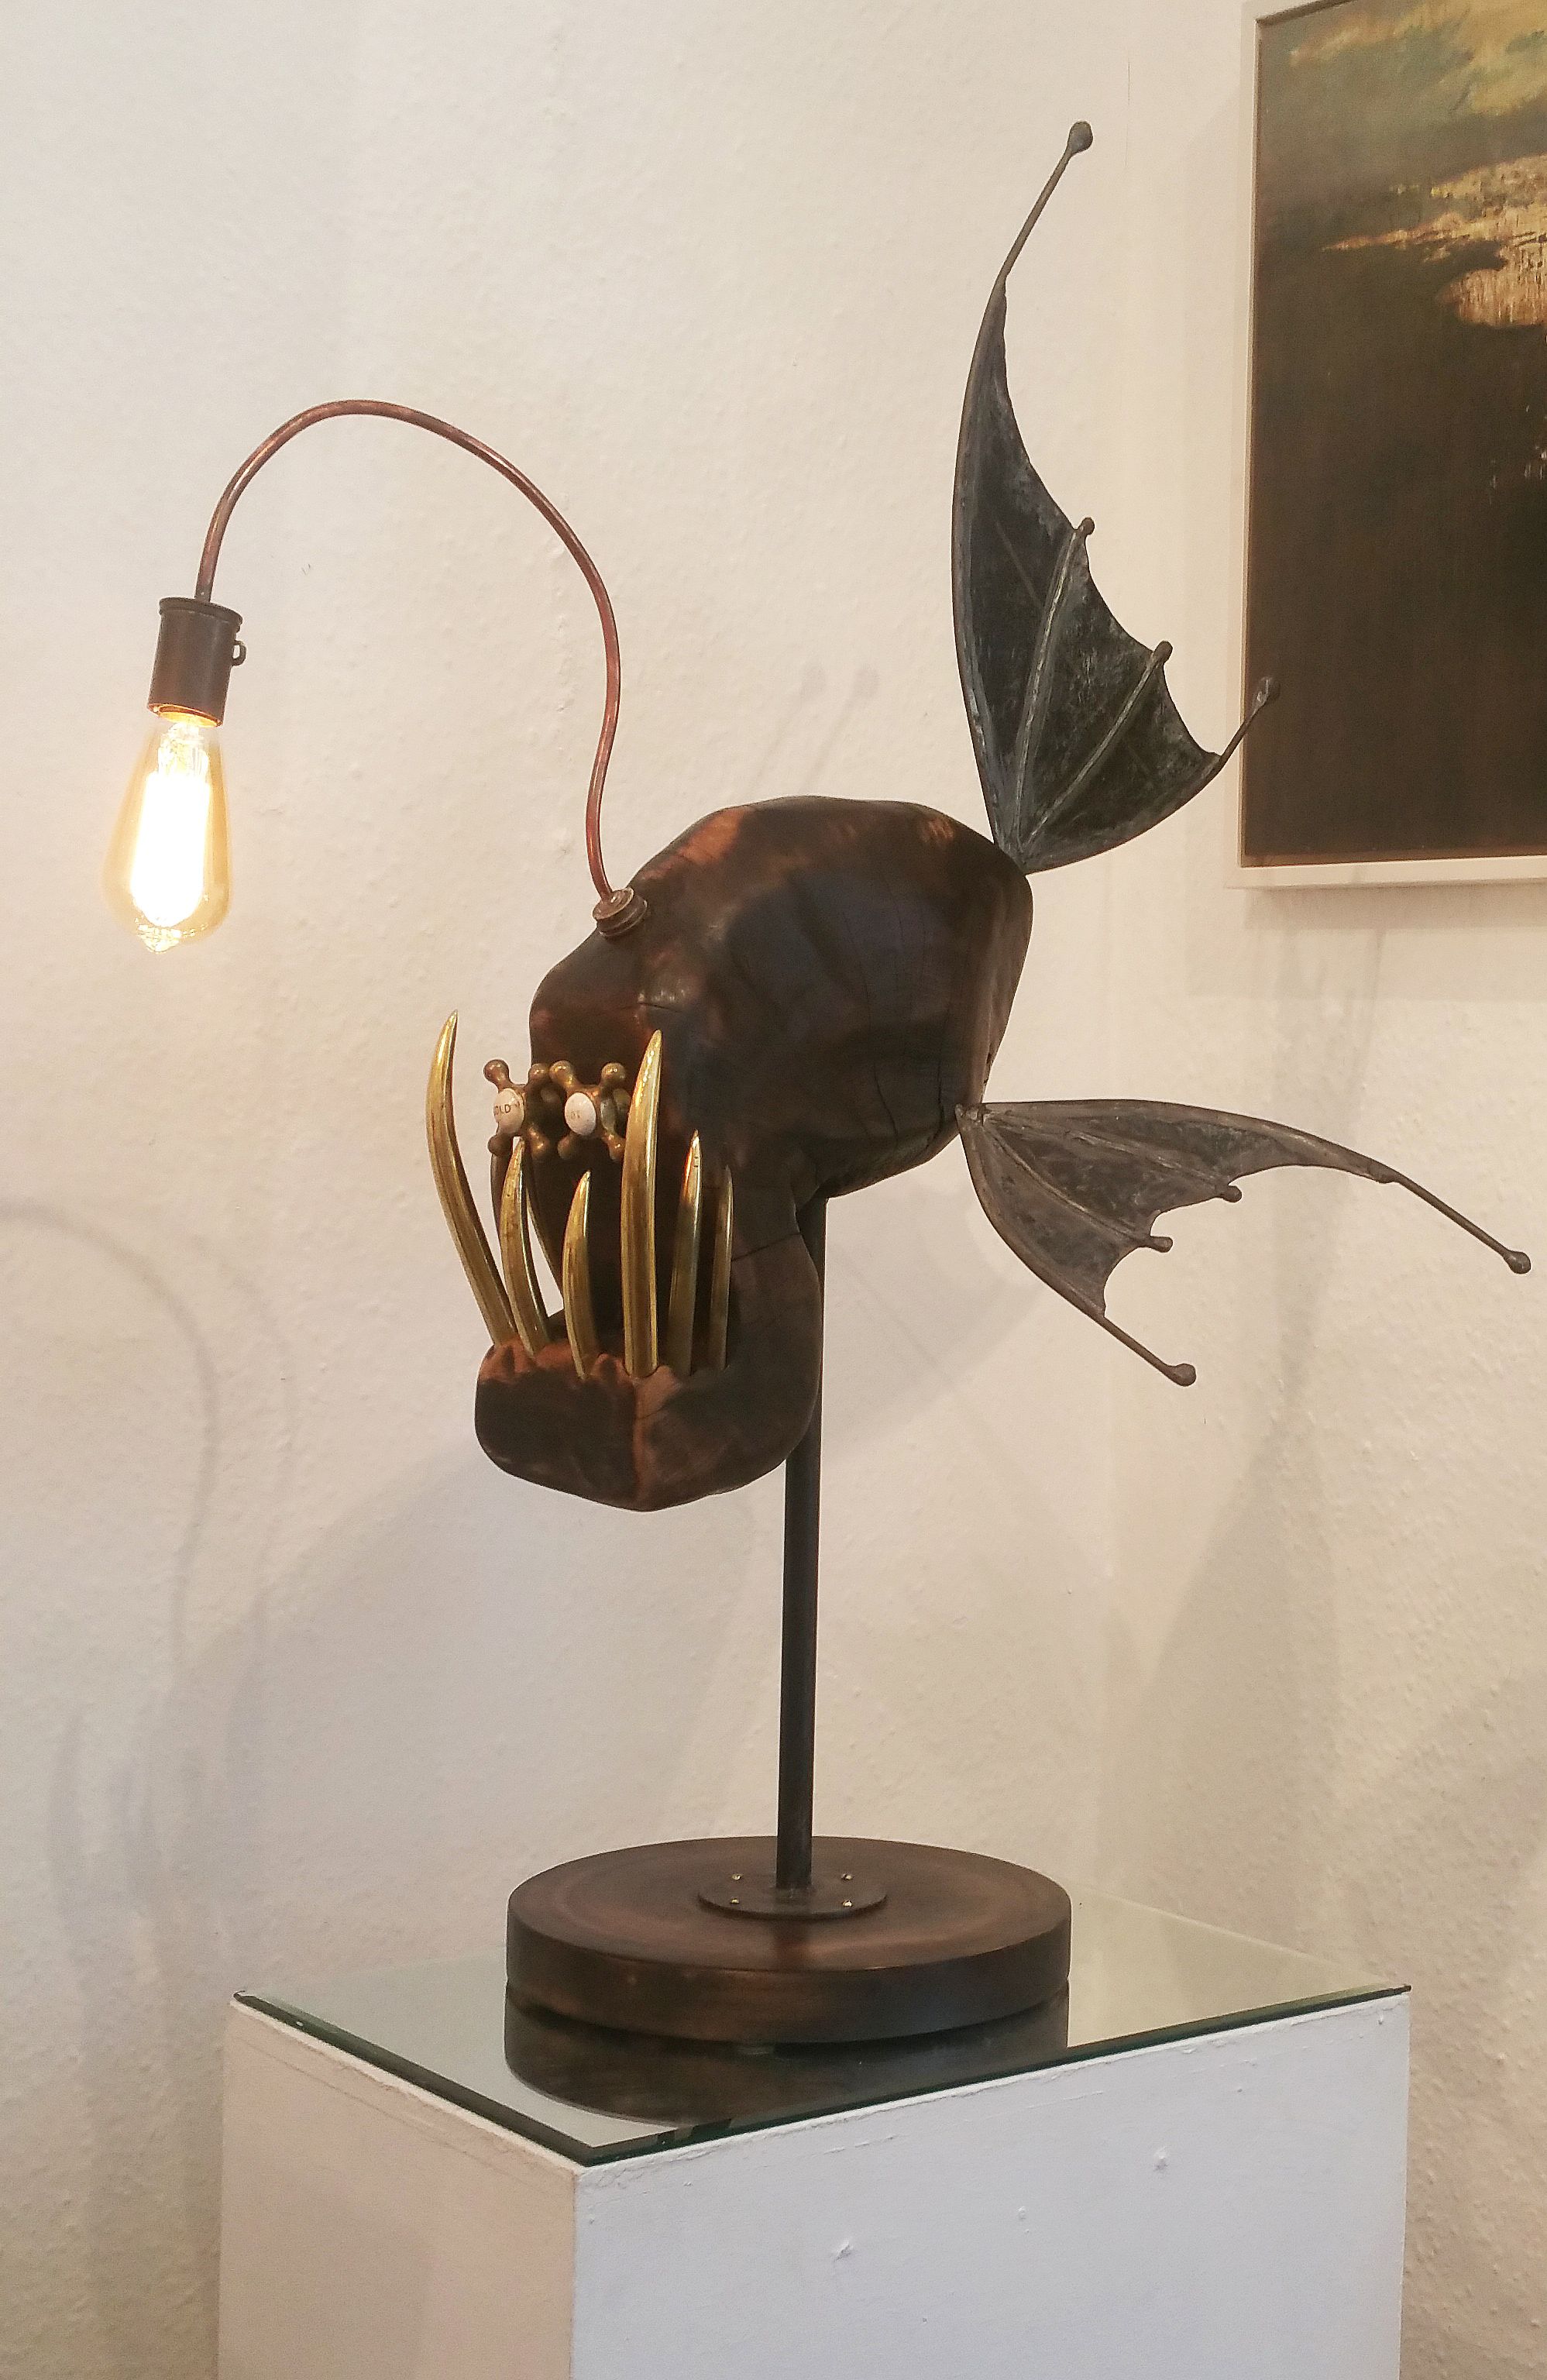 Niki Burns - The angler fish lamp 